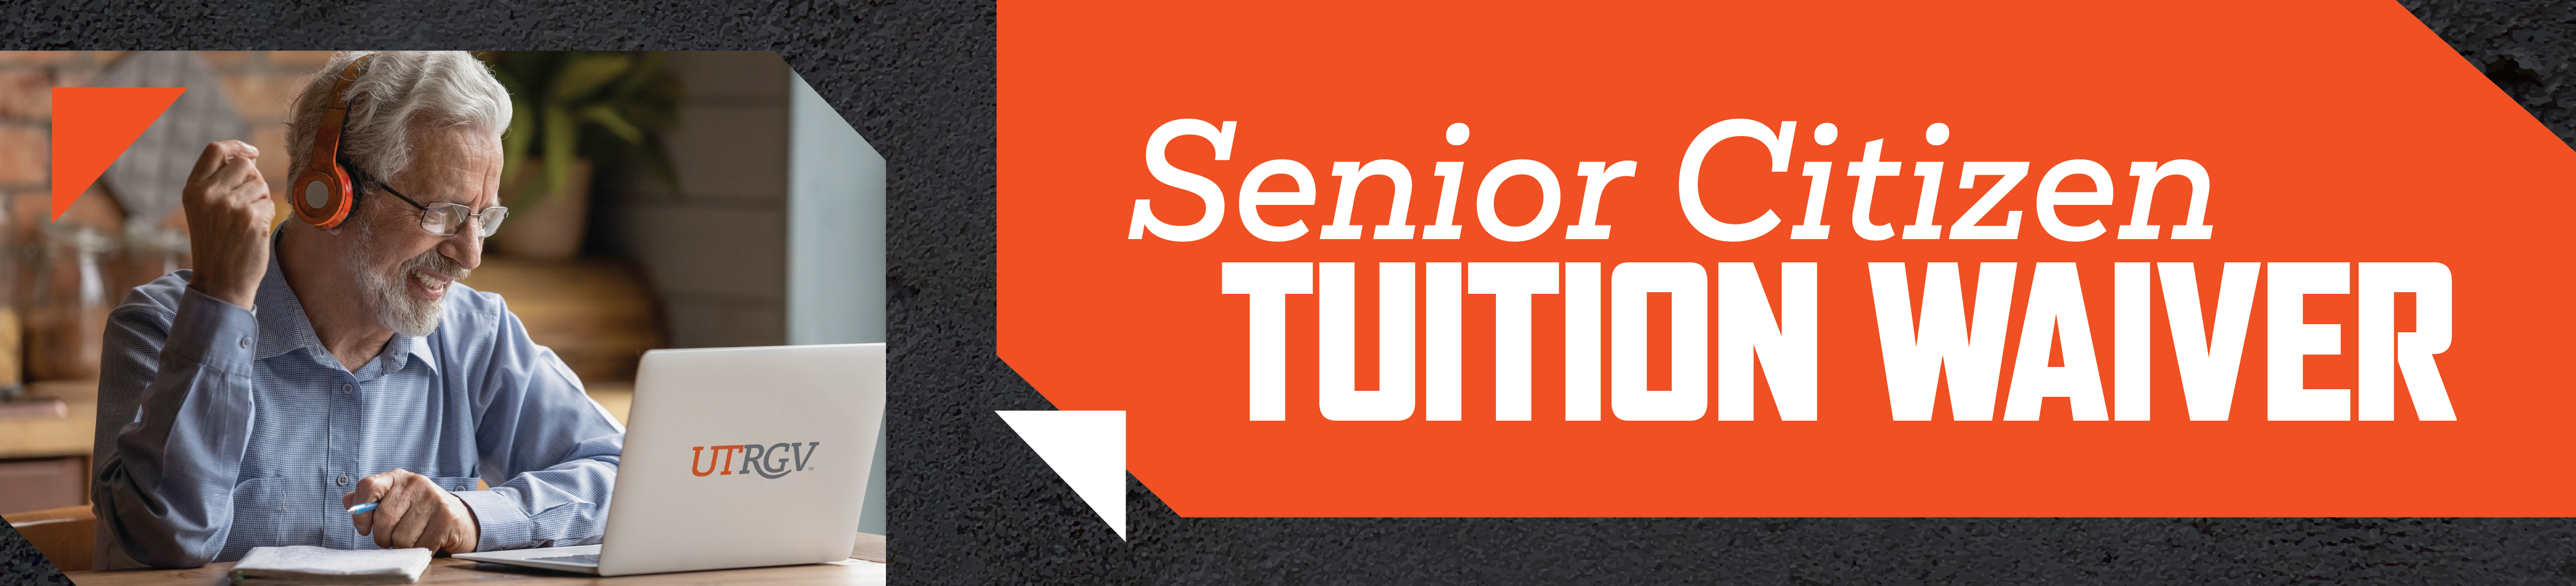 senior citizen tuition waiver banner